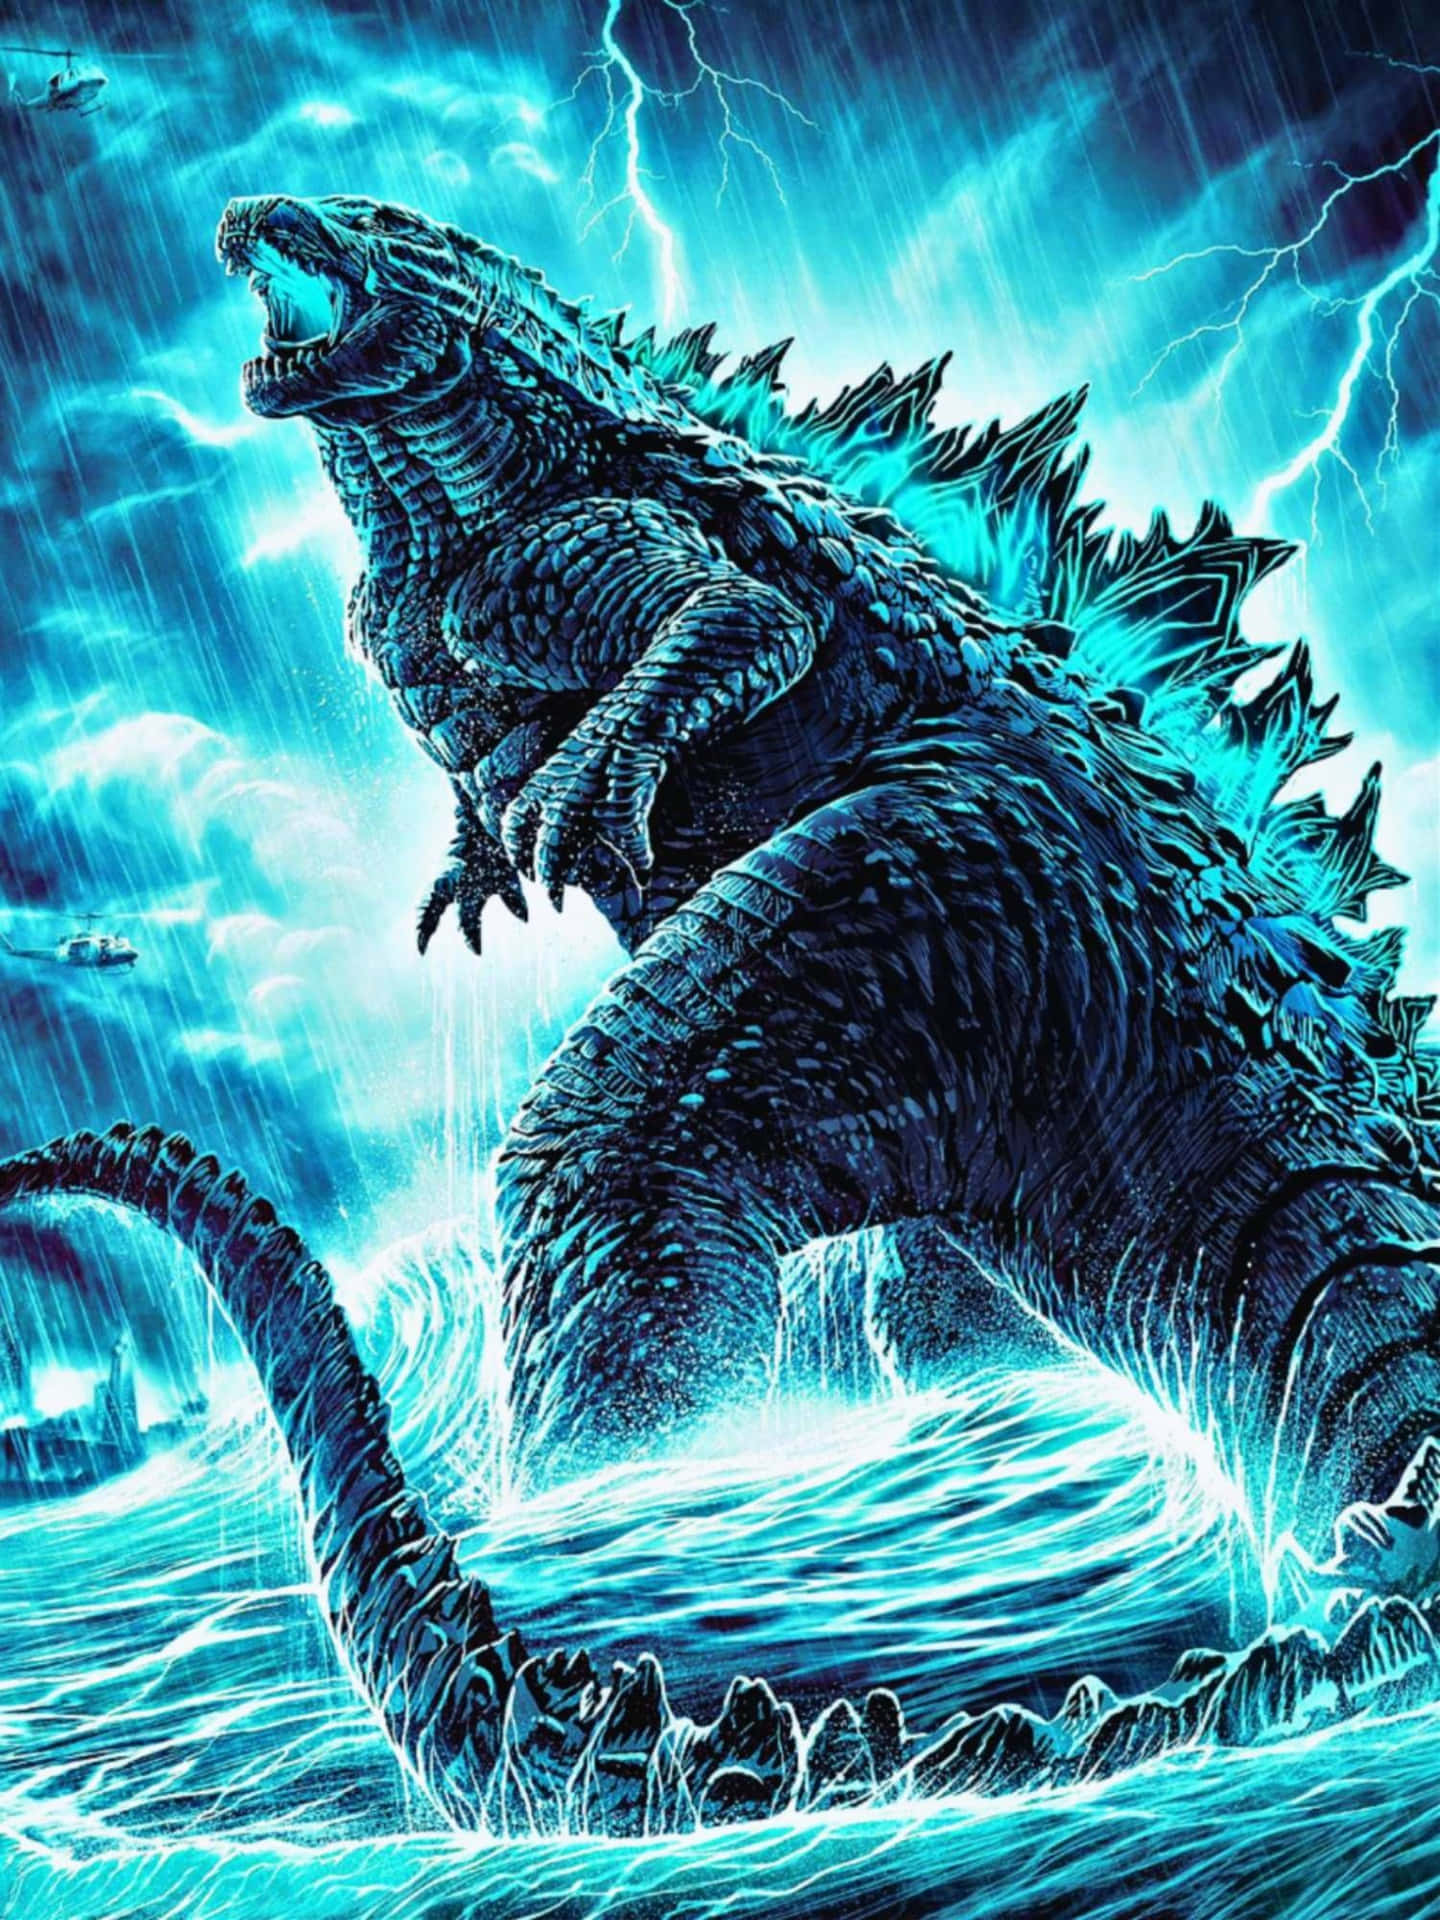 Electric Blue Godzilla Artwork Wallpaper